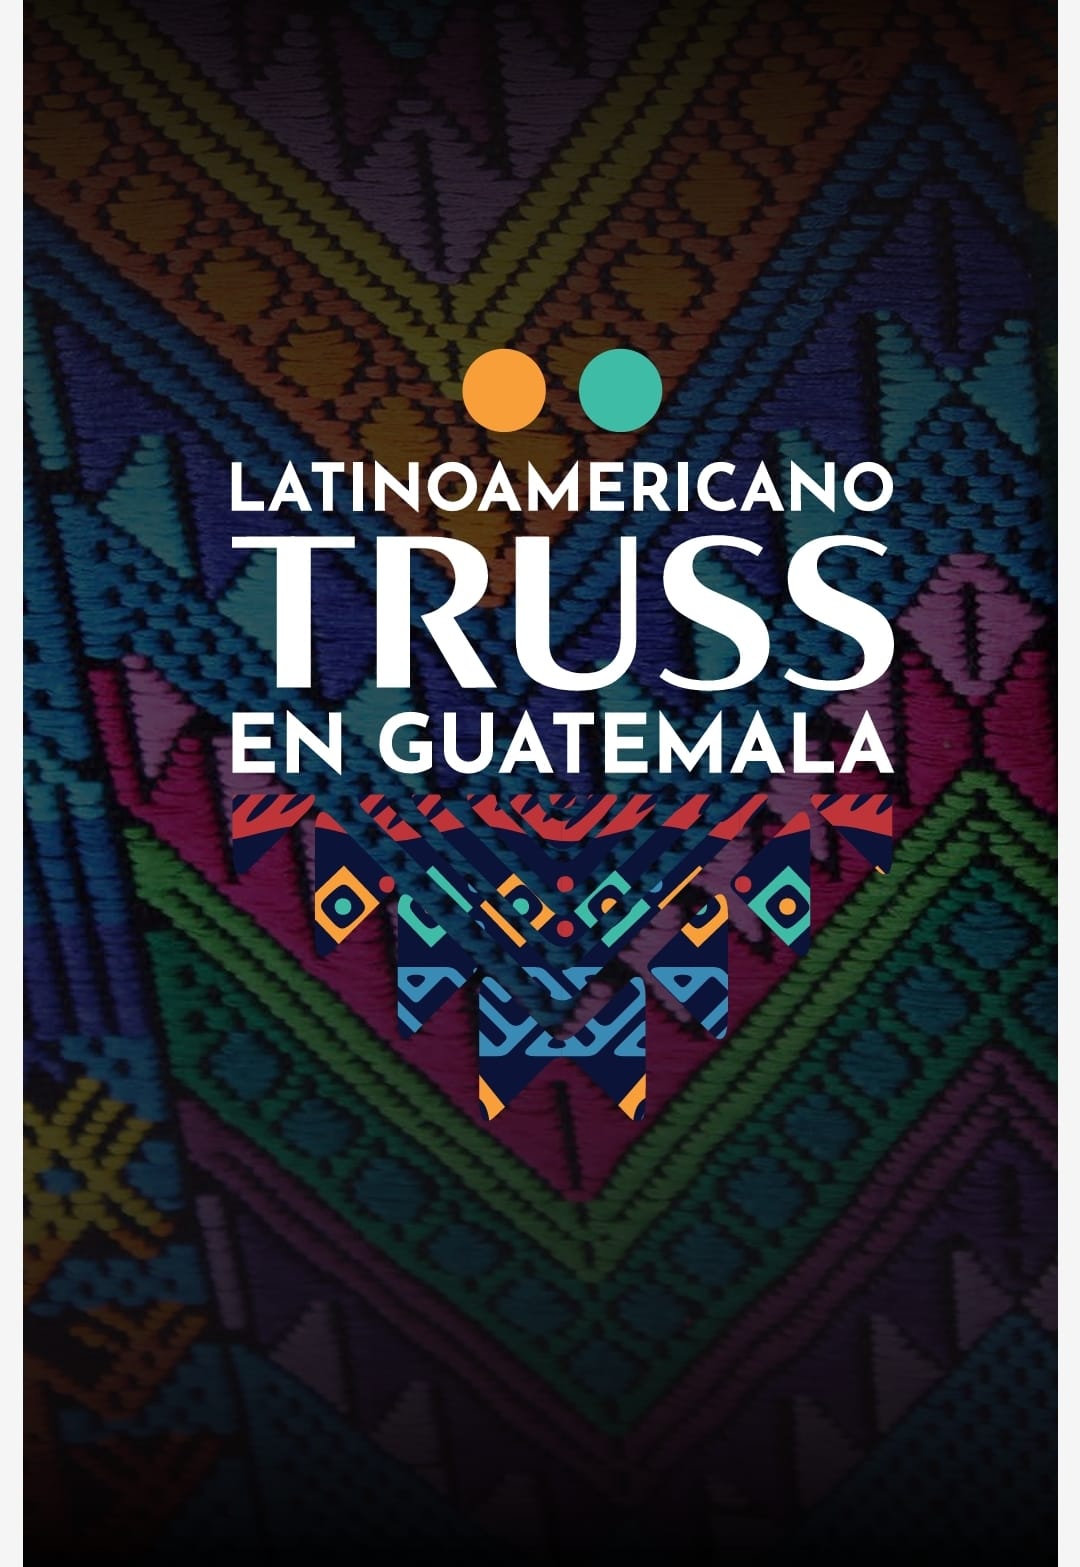 ¡Bienvenidos al segundo evento Latinoamericano Truss en Guatemala!